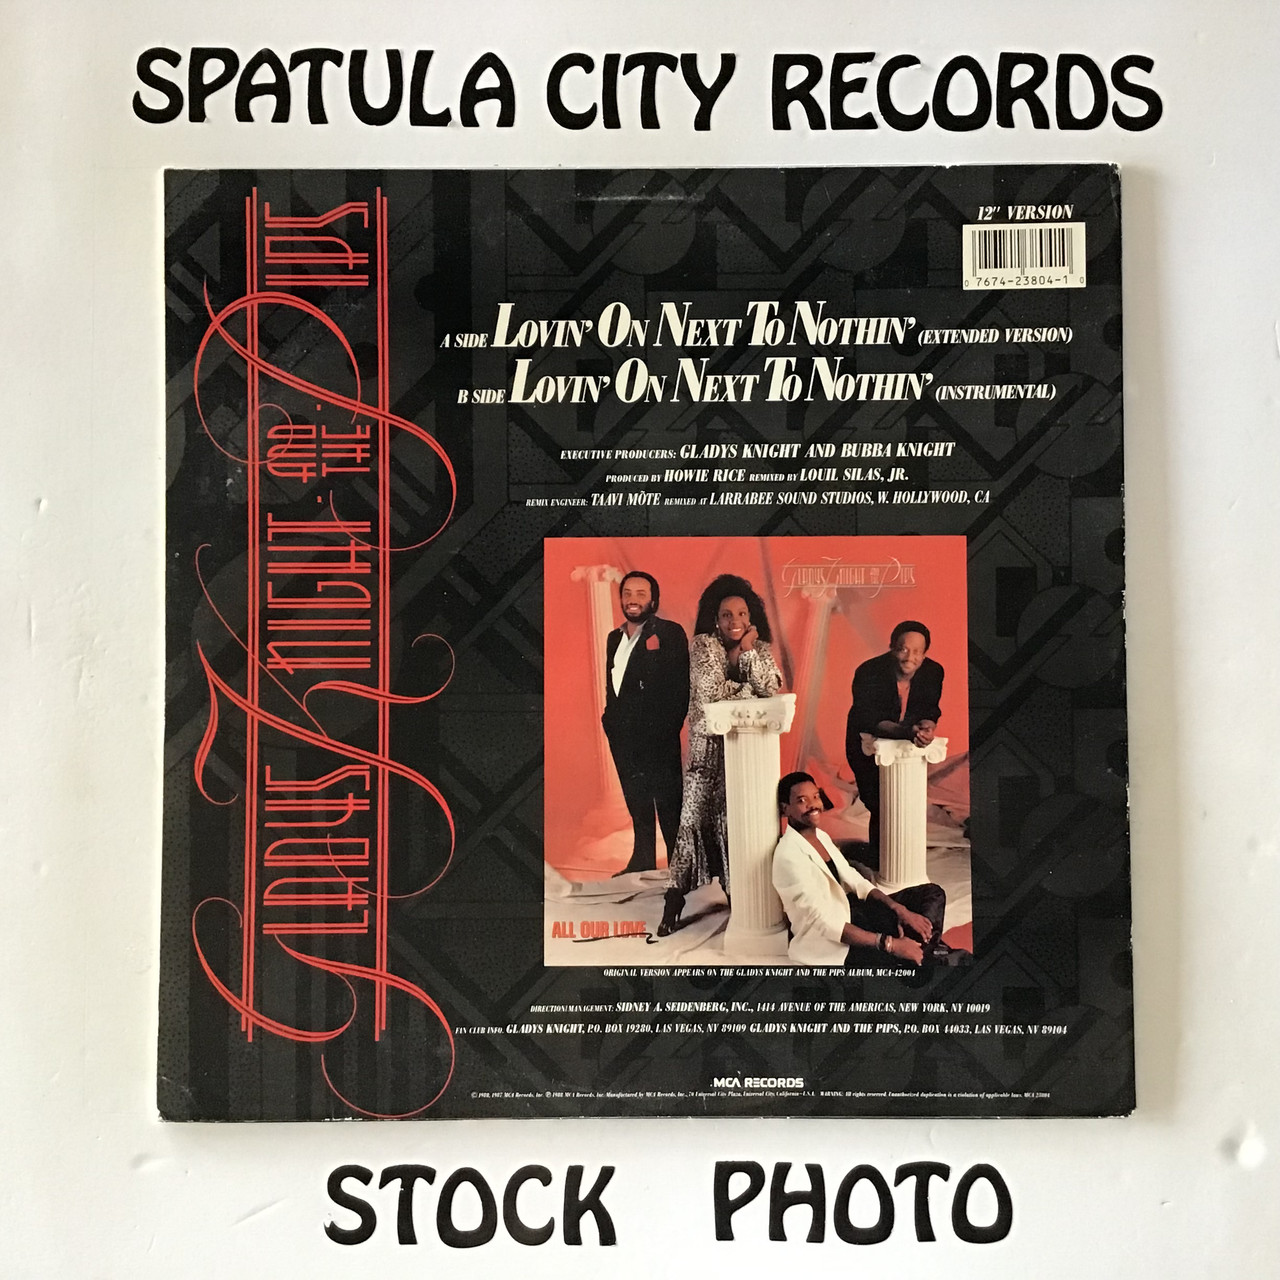 Gladys Knight and the Pips - Lovin' On Next to Nothin' - vinyl record album LP